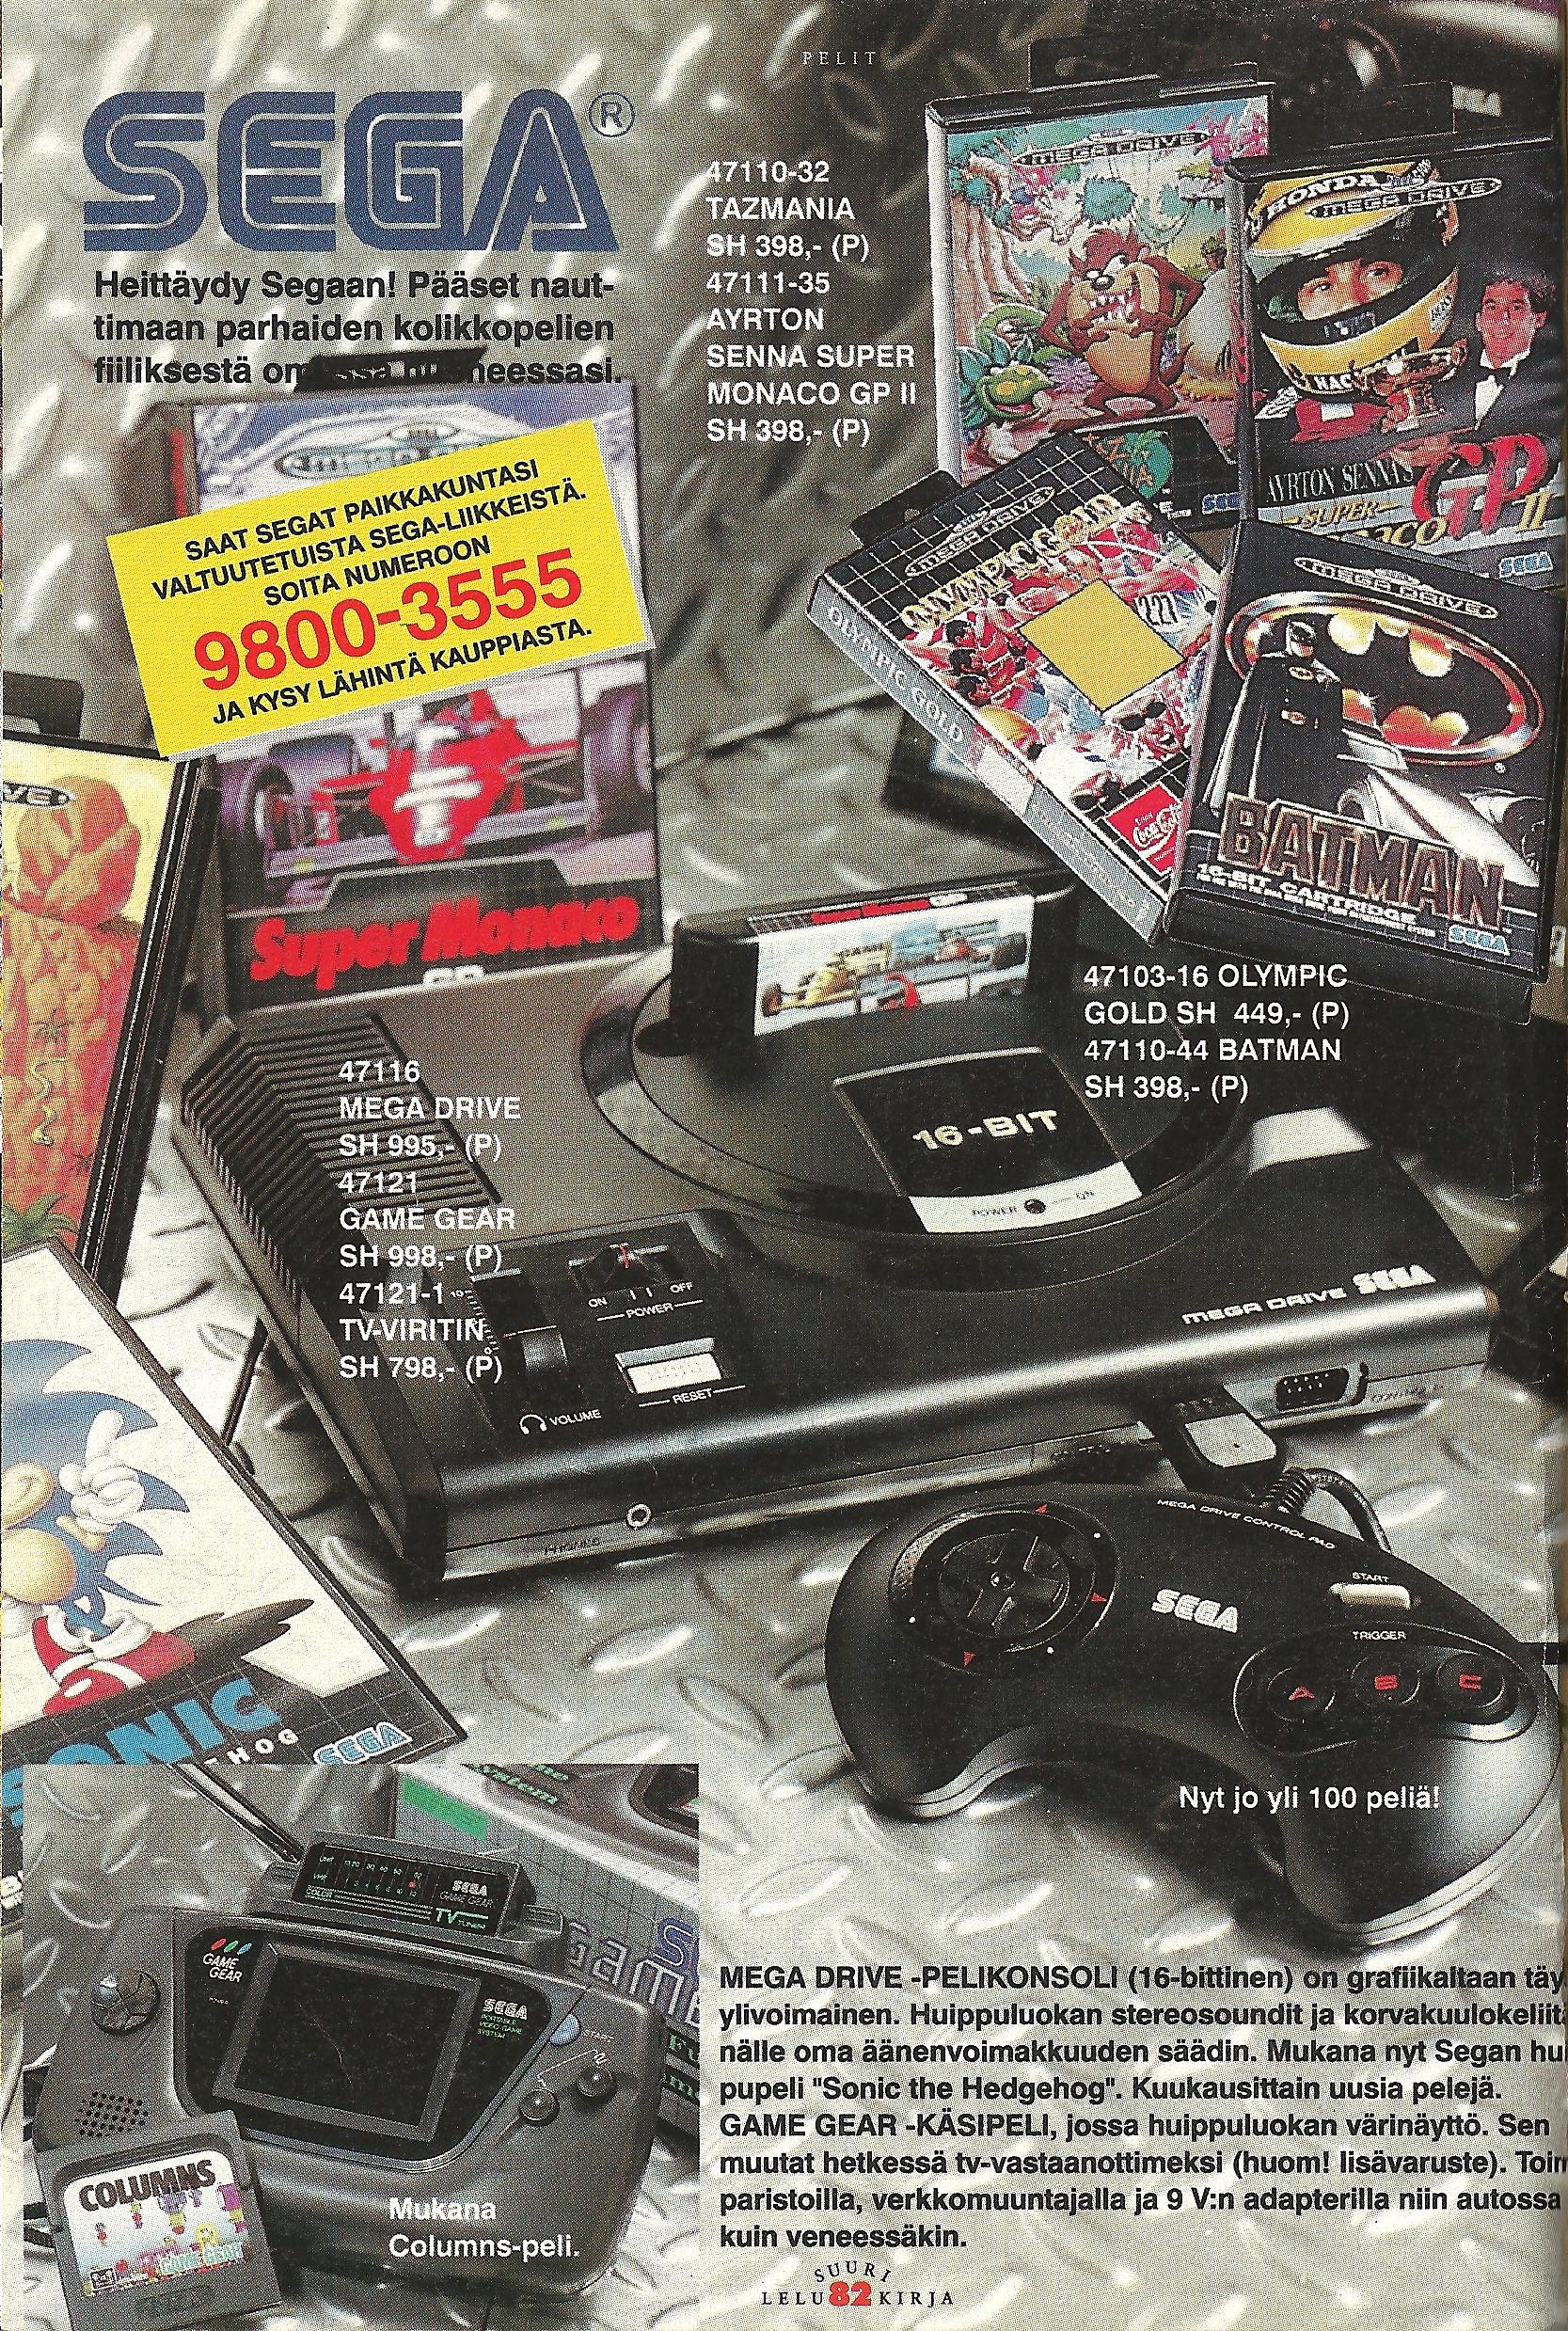 Suuri lelukirja FI 1992 Sega.jpg